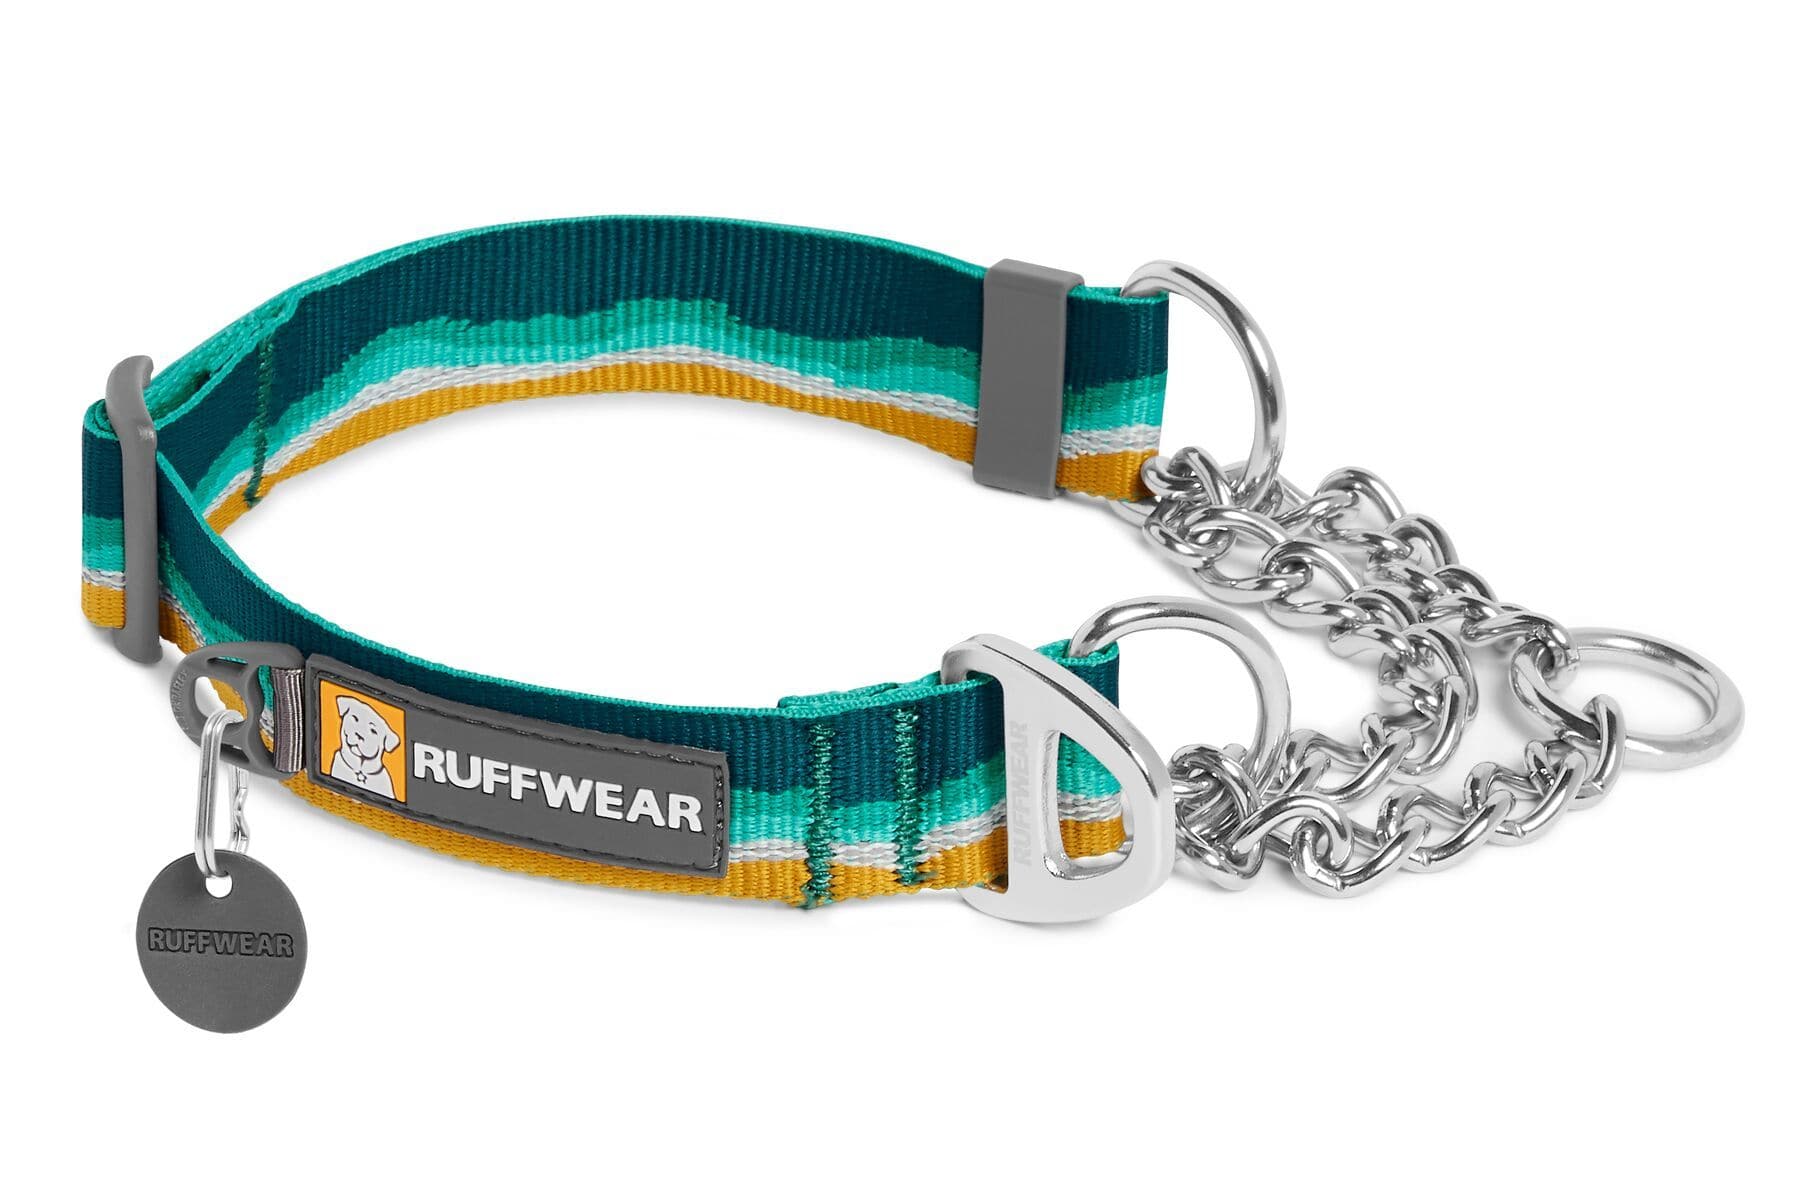 Collar para Perros Modelo Chain Reaction Playa (Seafoam) - Ruffwear